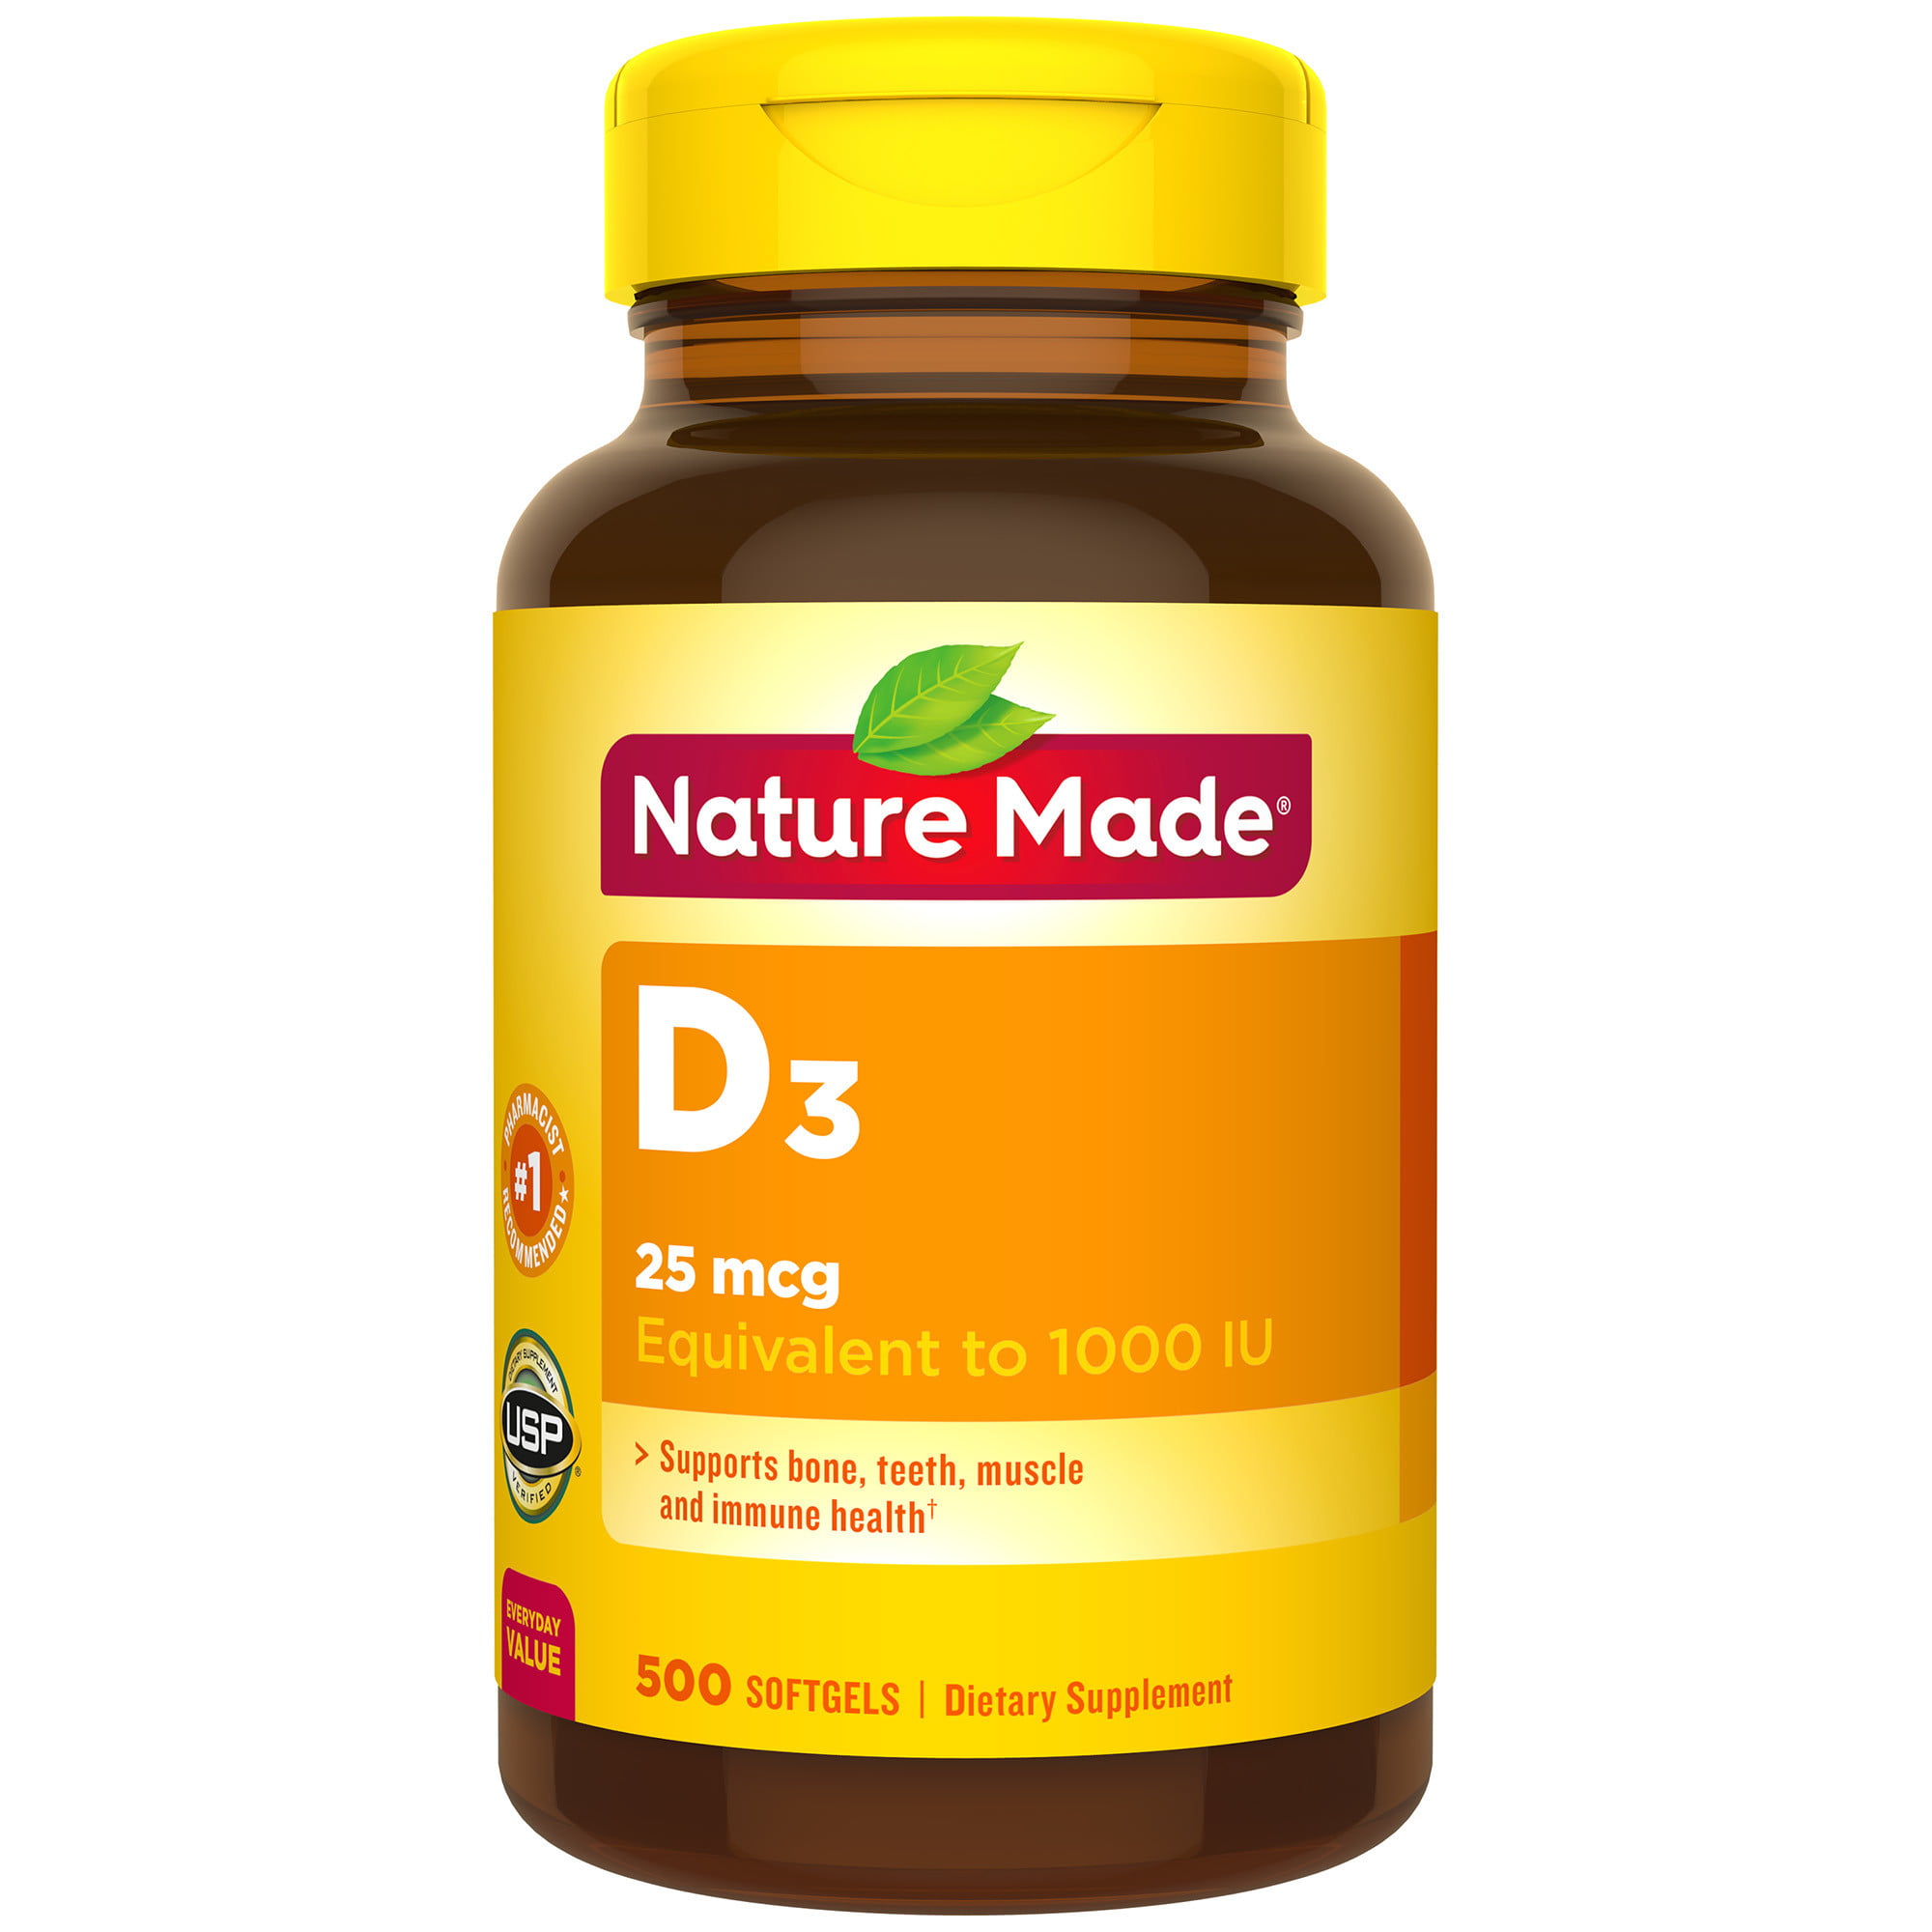 nature-made-vitamin-d3-1000-iu-25mcg-softgels-500-count-everyday